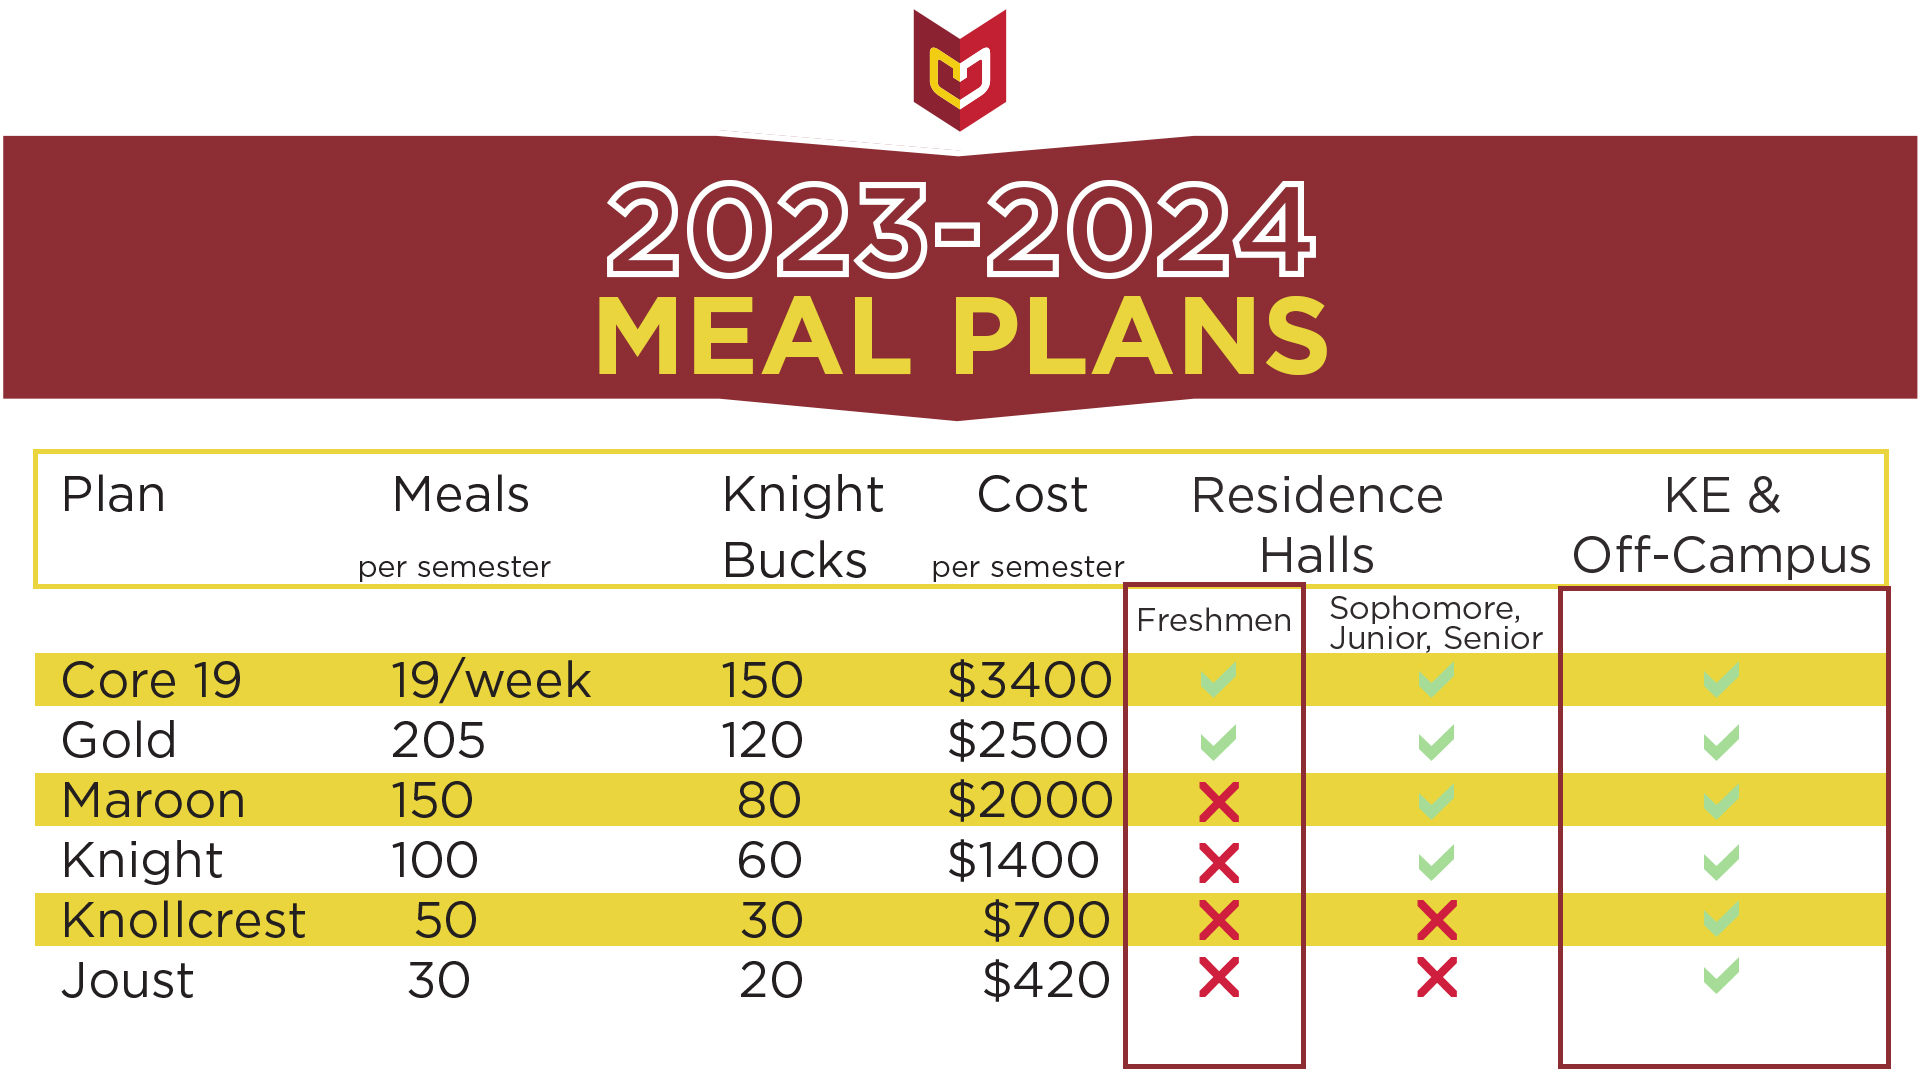 Meal Plan Options Chart_upd.jpg